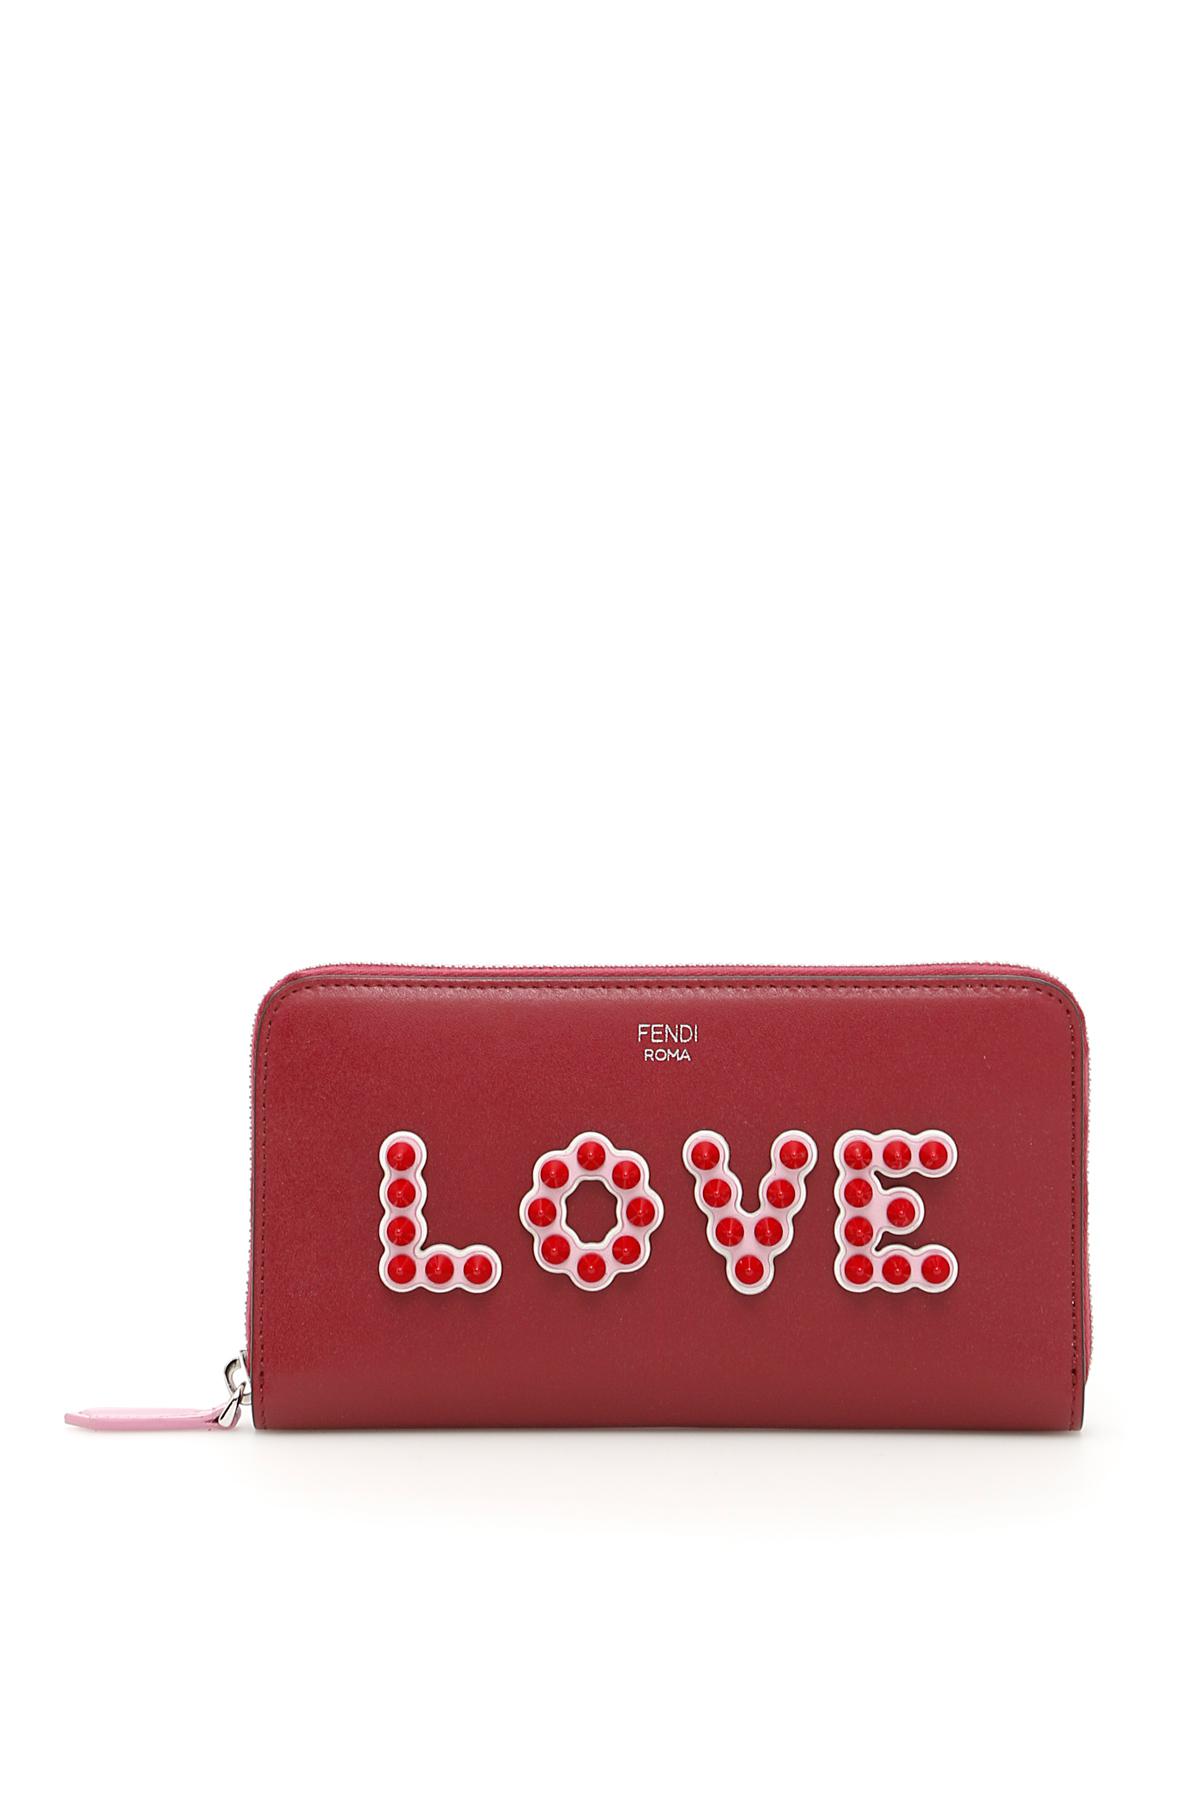 Fendi Leather Zip-around Love Wallet in Red | Lyst